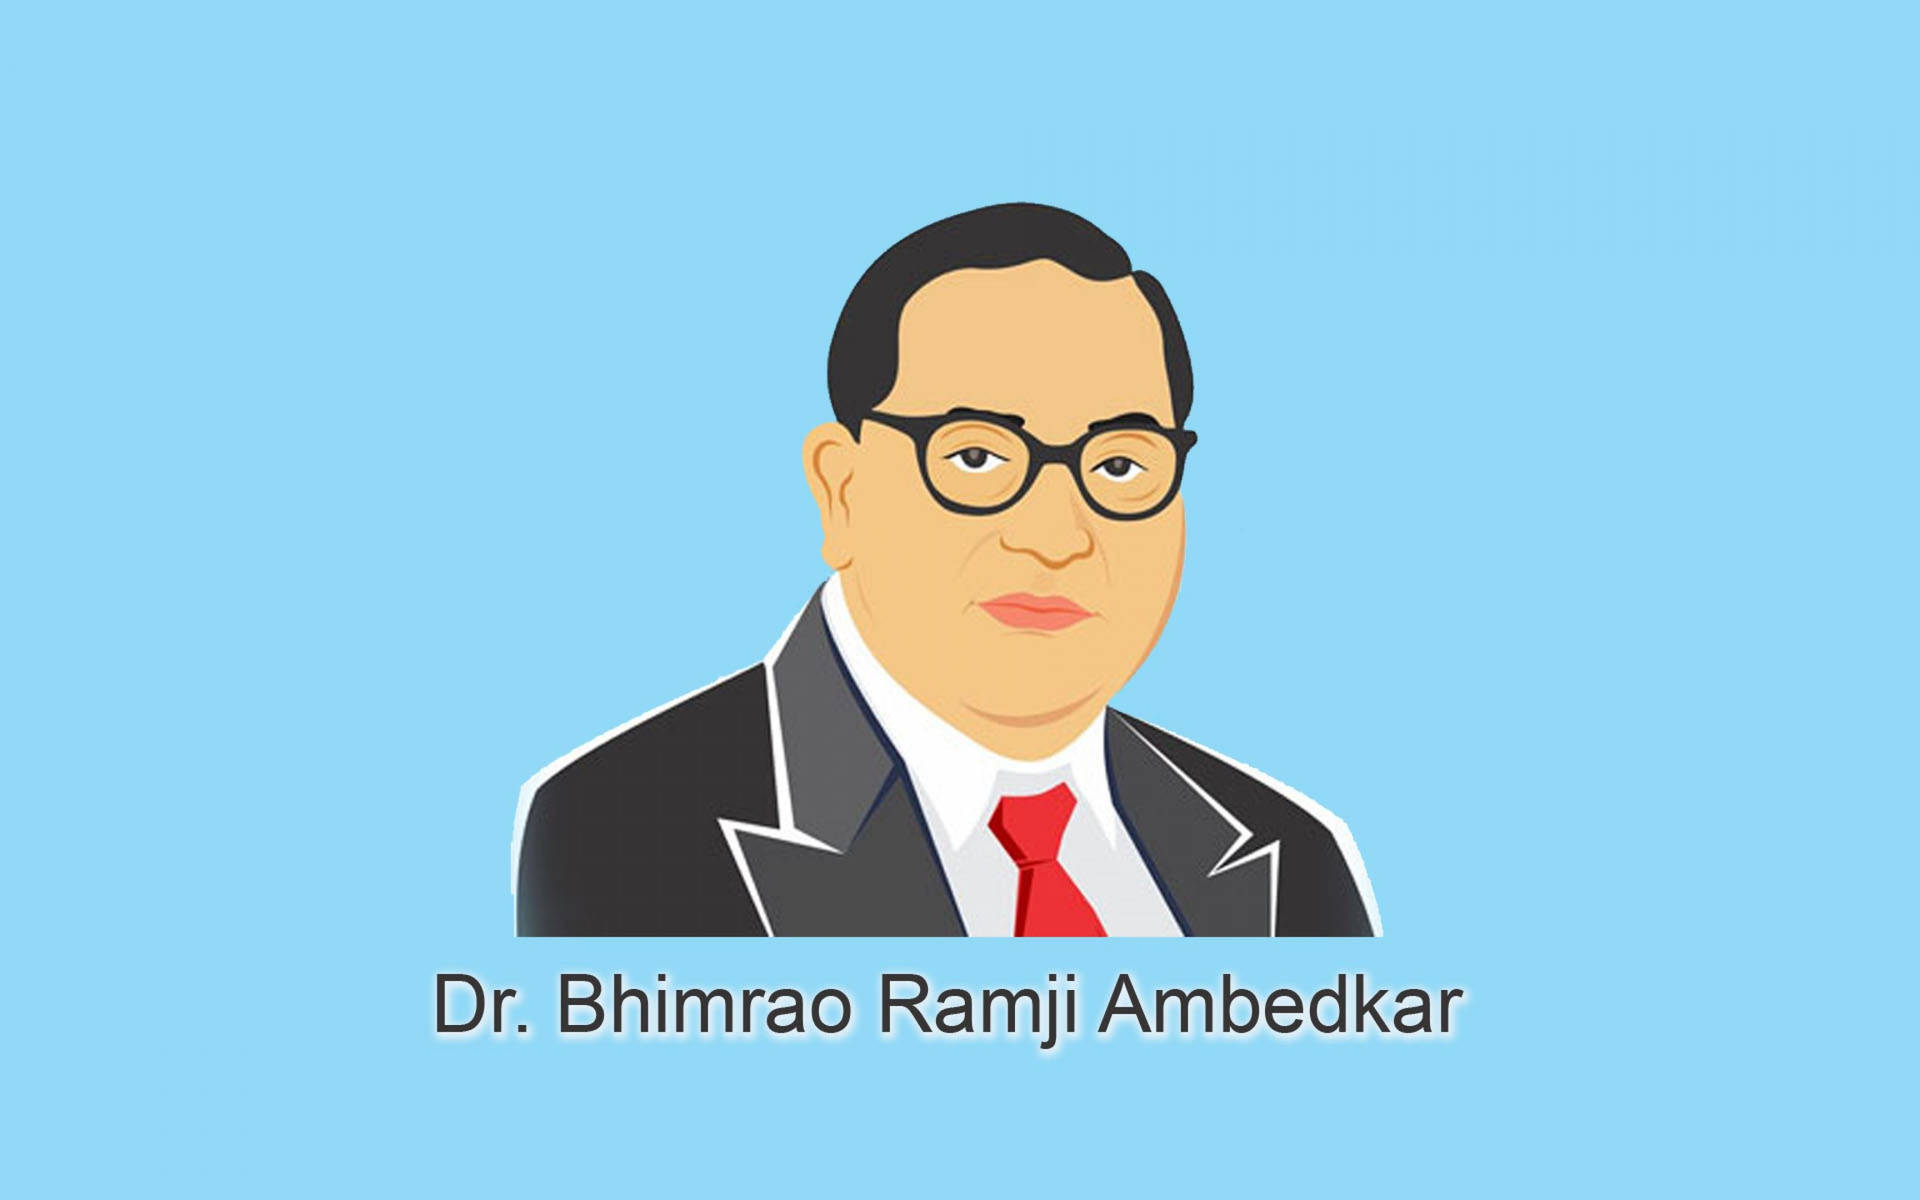 Ambedkar Animated Illustration